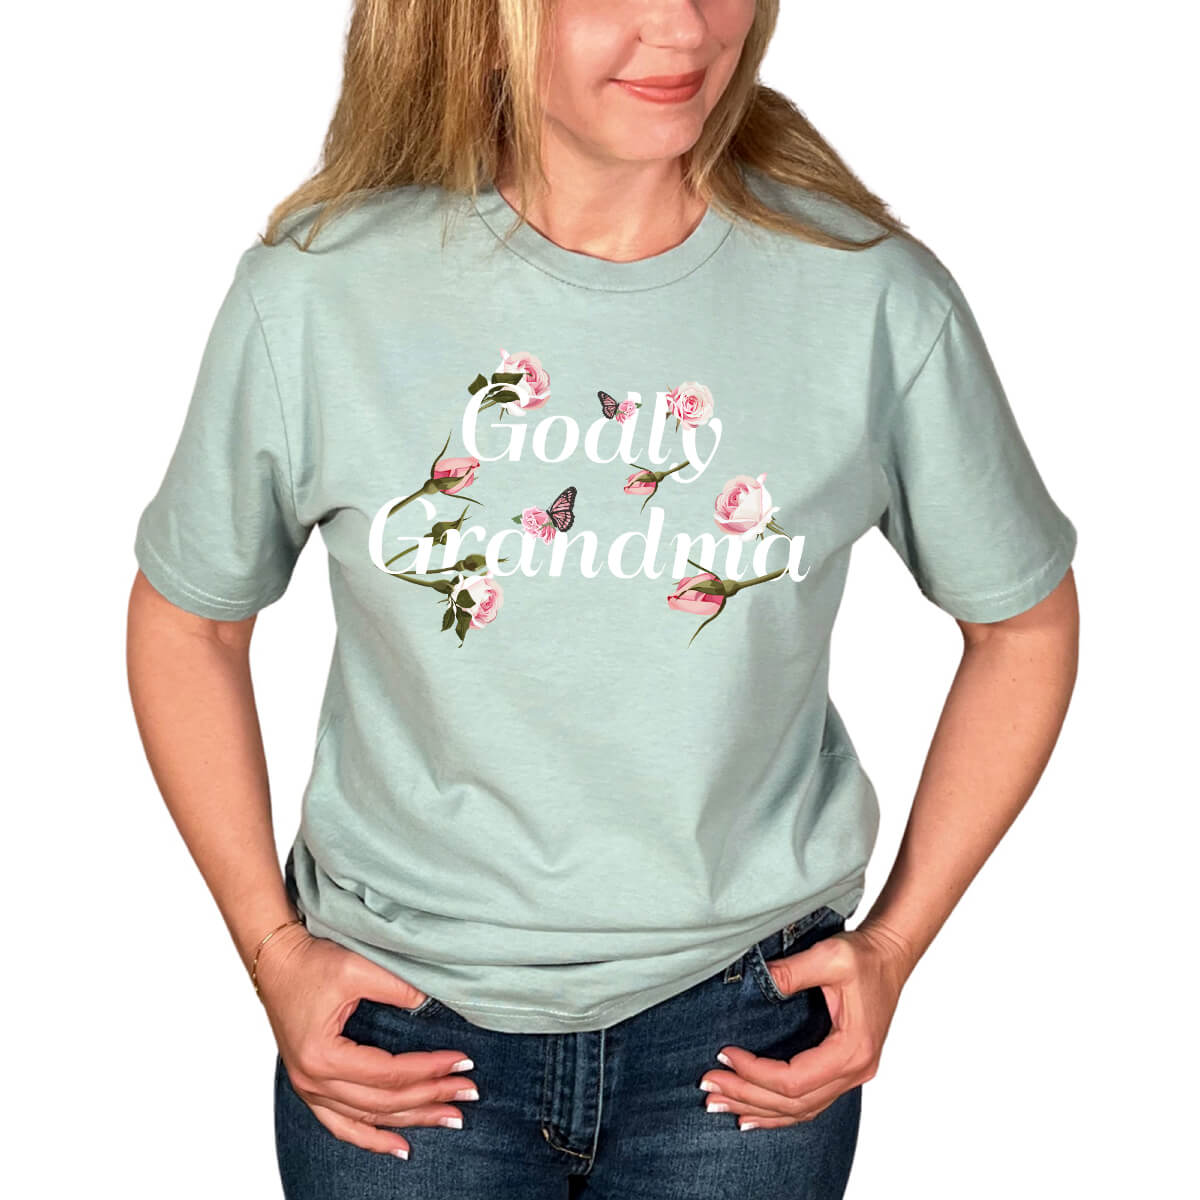 Godly Grandma T-Shirt